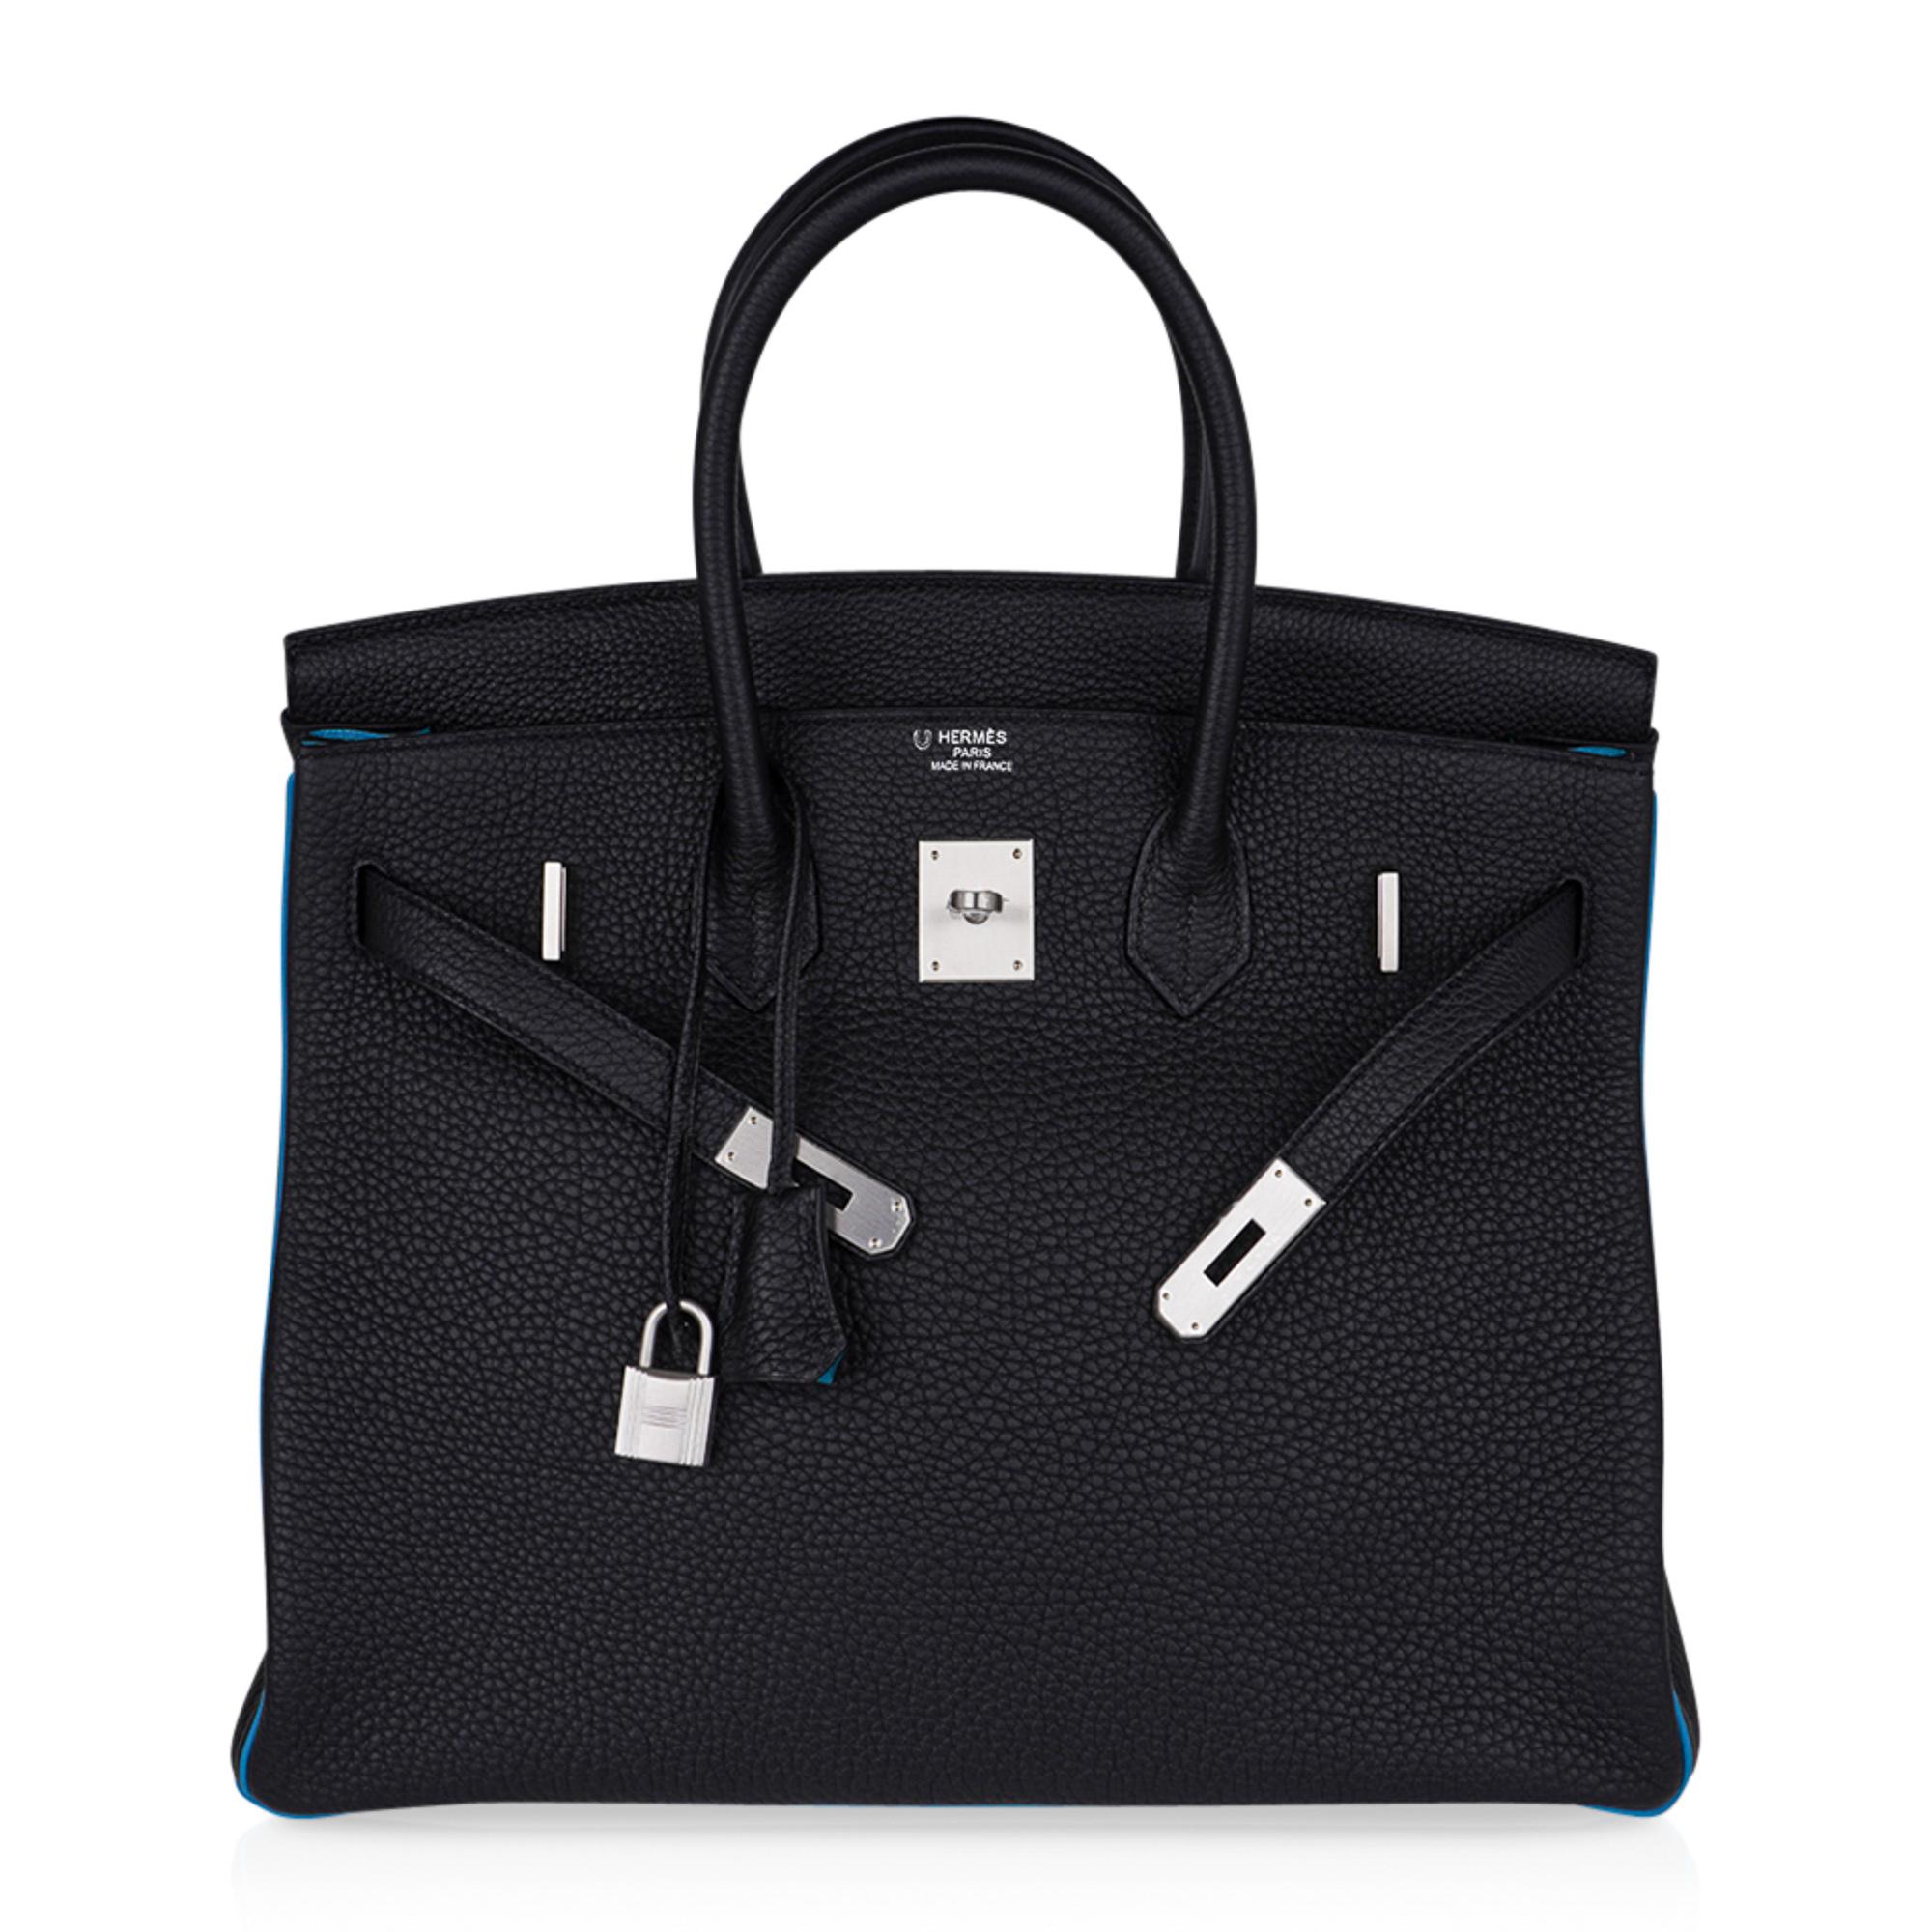 Hermes Birkin HSS 35 Black / Turquoise Bag Brushed Palladium Togo Leather For Sale 4